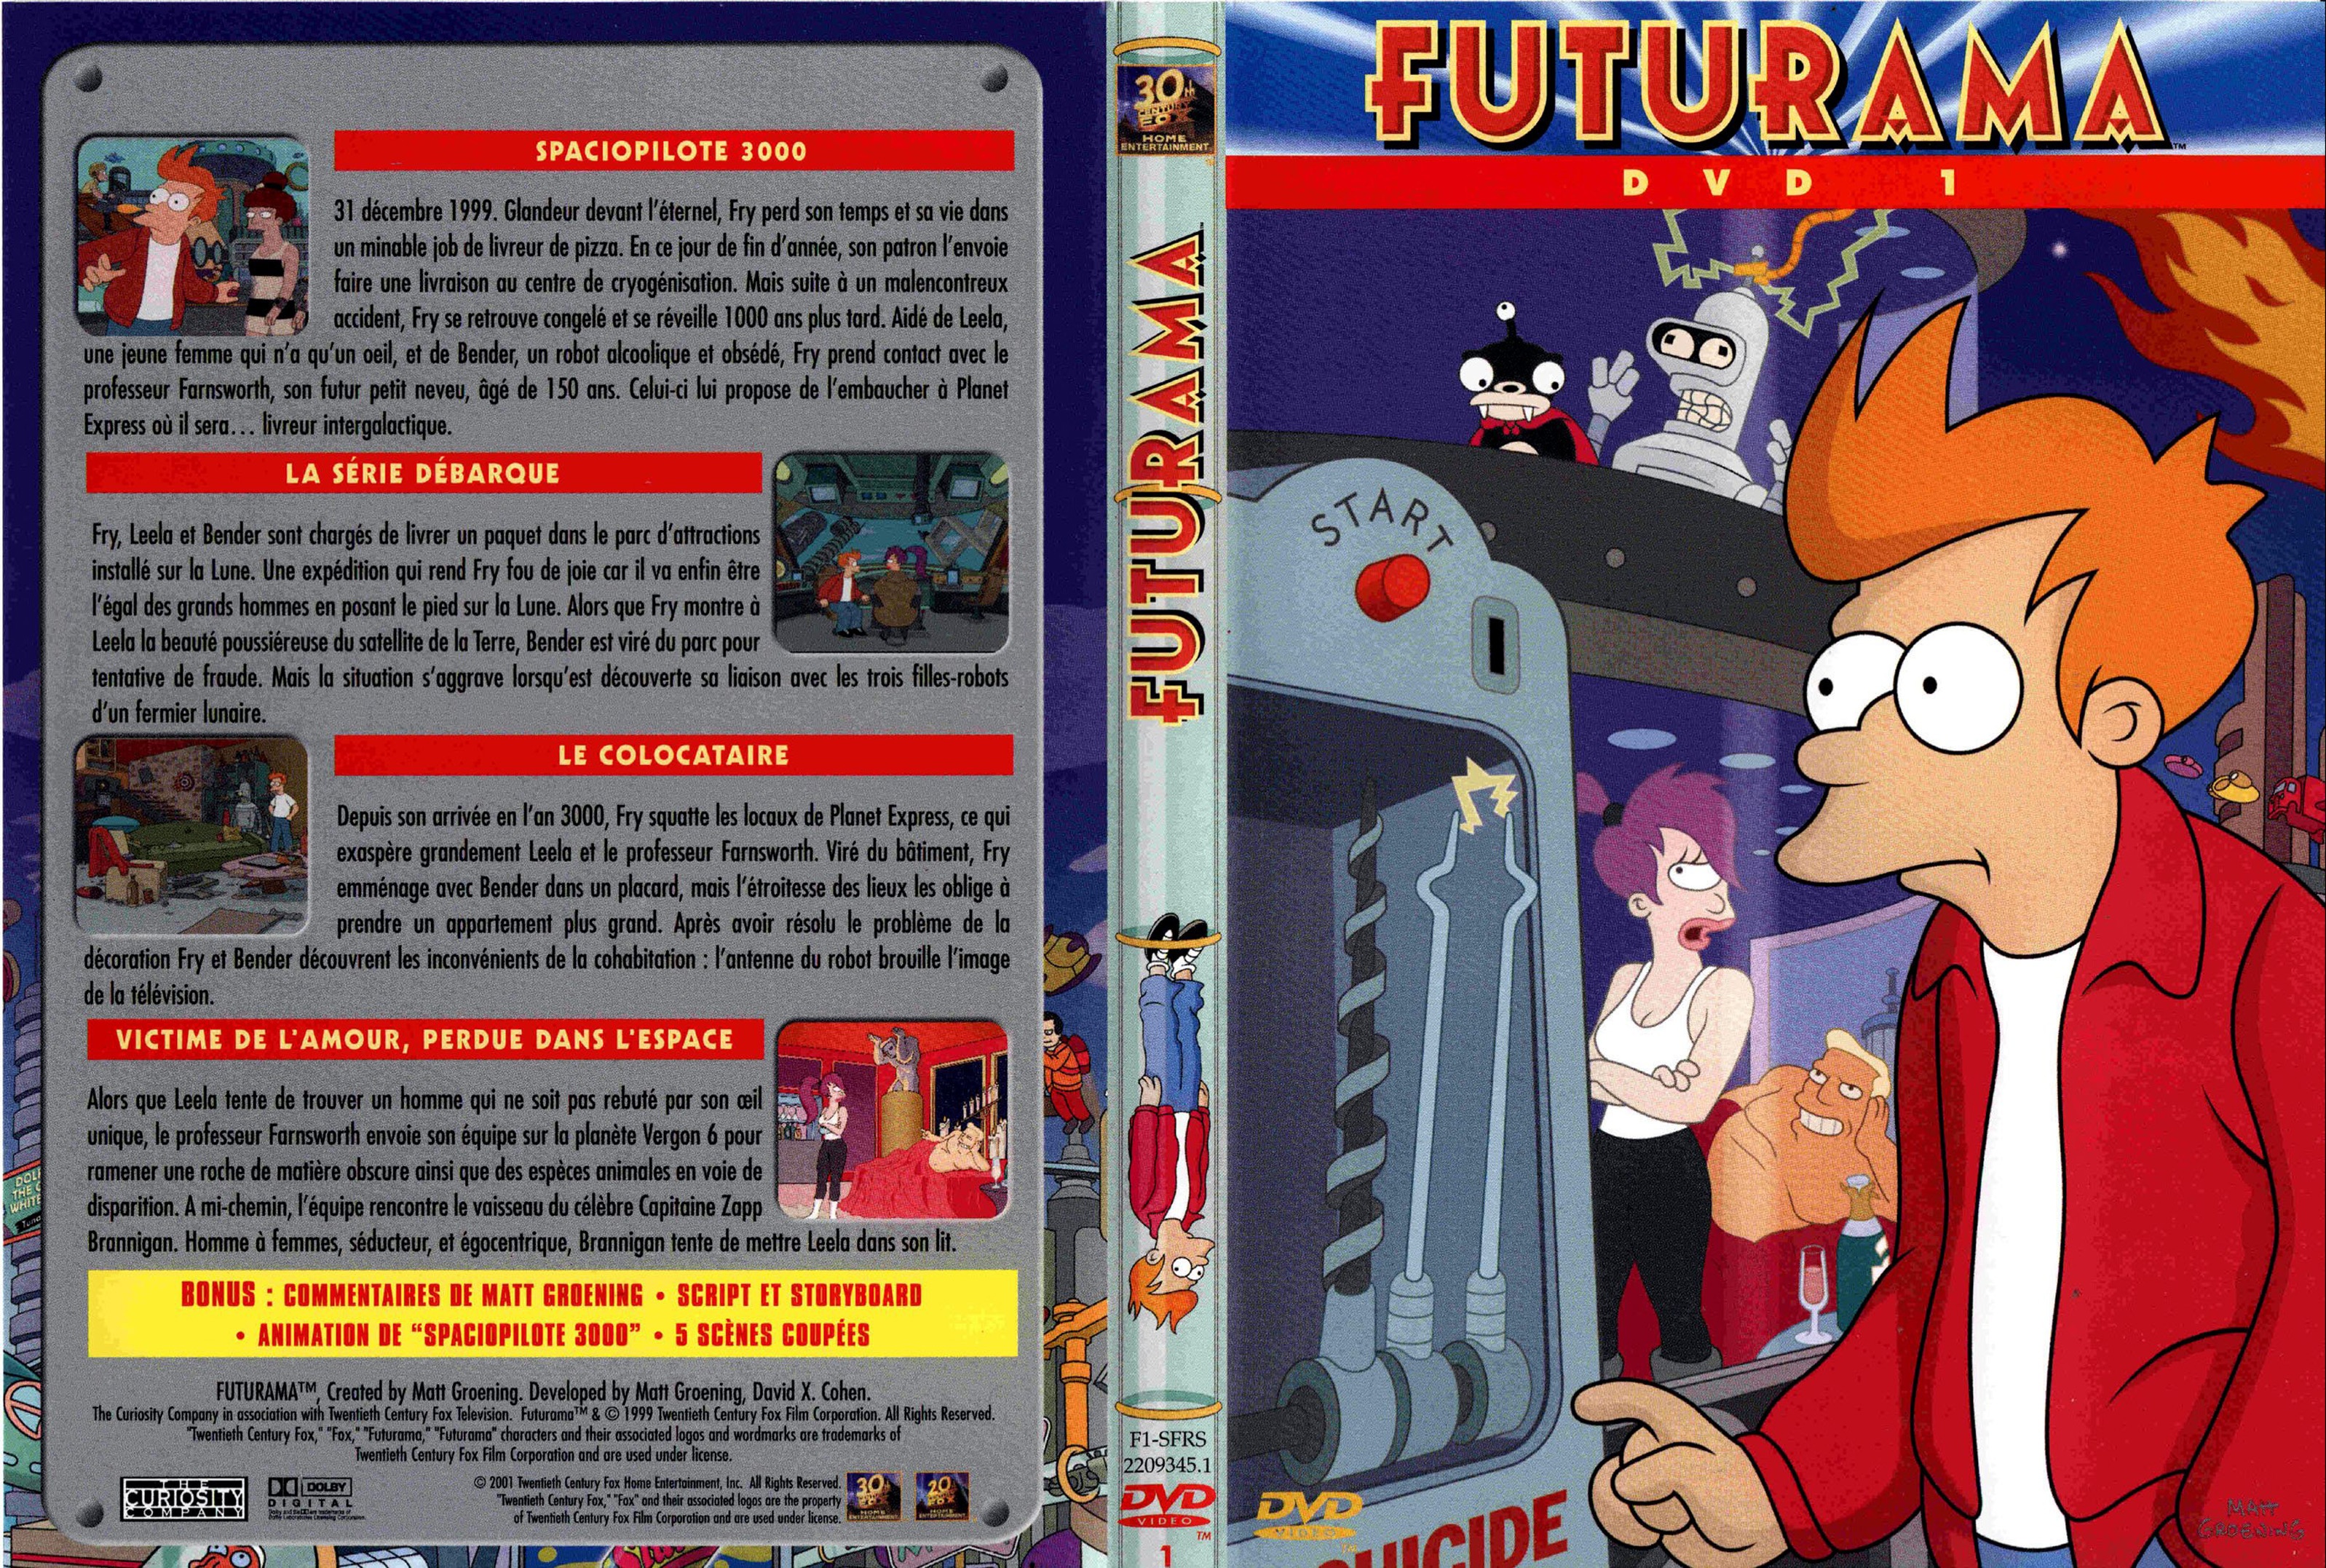 Jaquette DVD Futurama saison 1 DVD 1